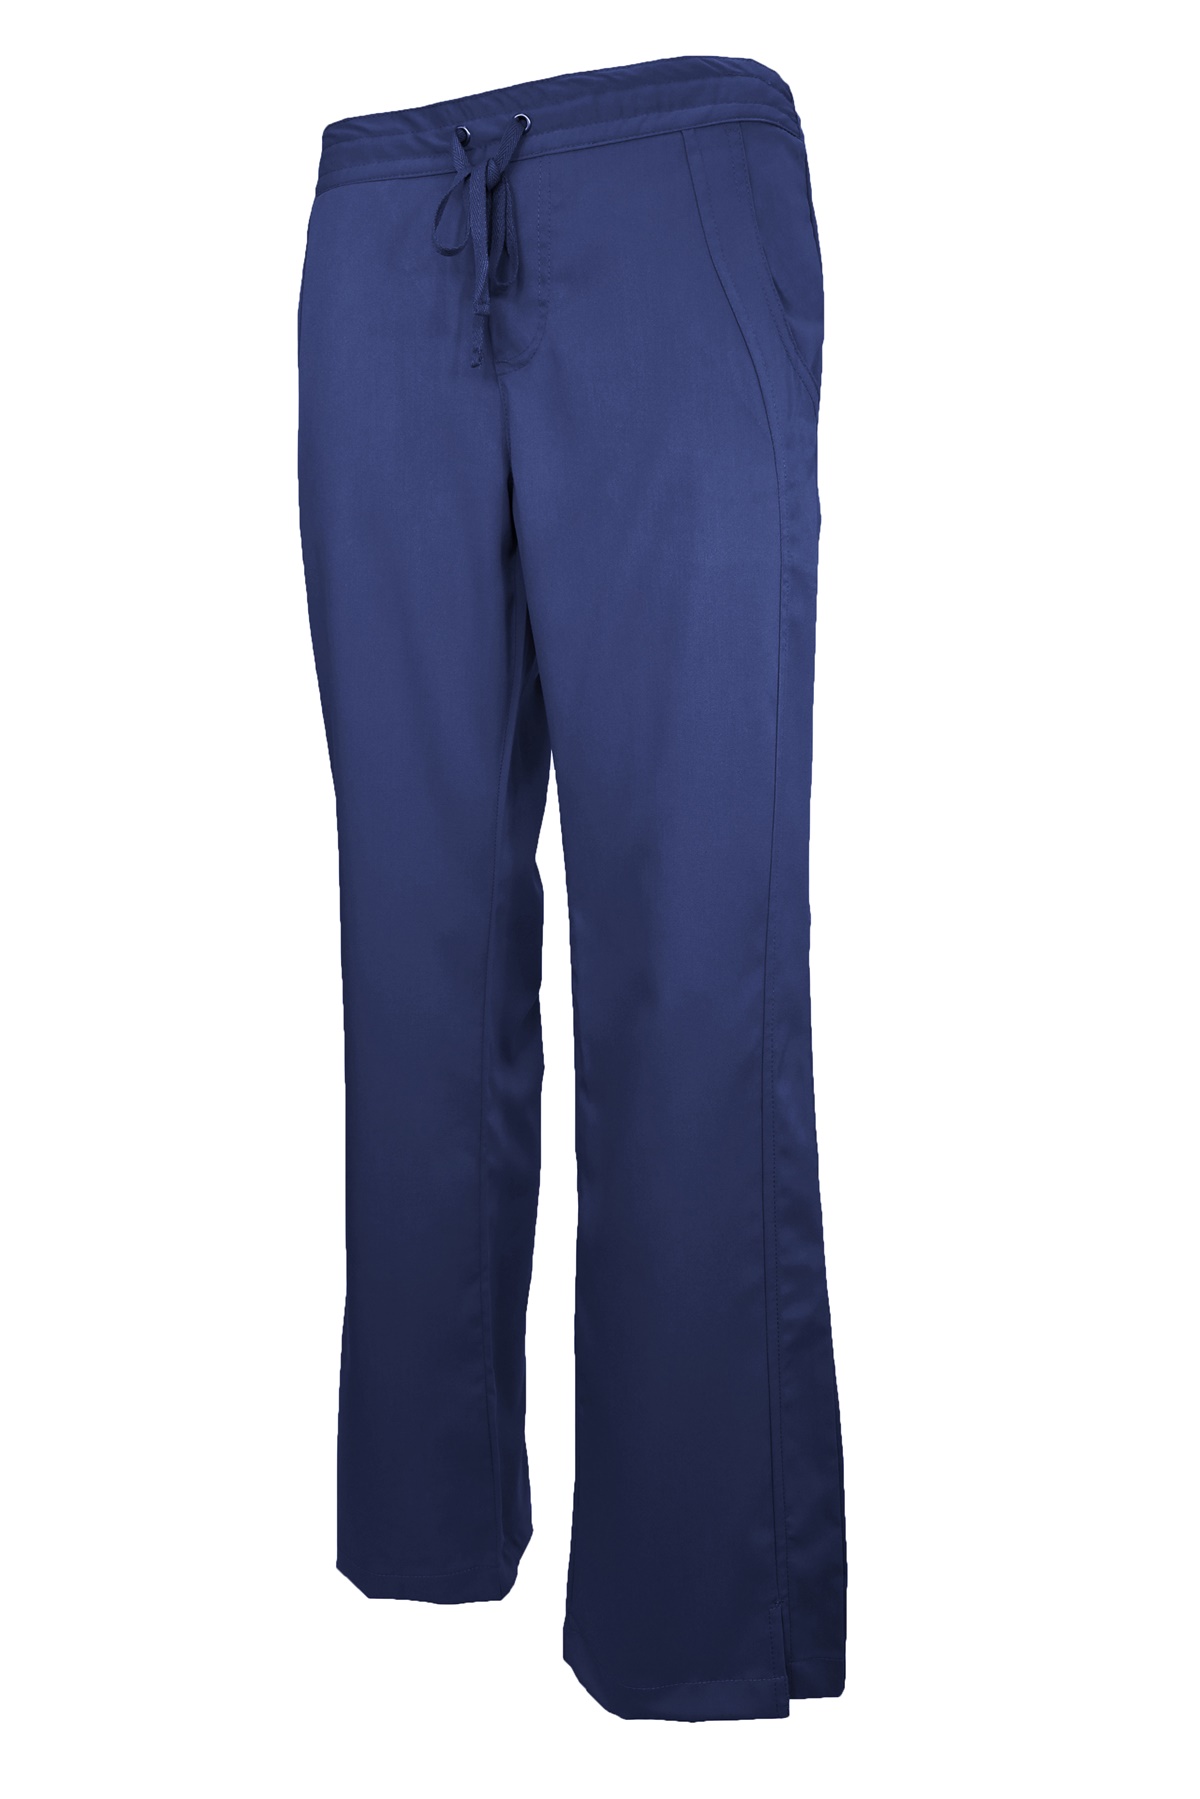 Navy Blue Drawstring Scrub Pant 2 Pocket - Natural Uniforms